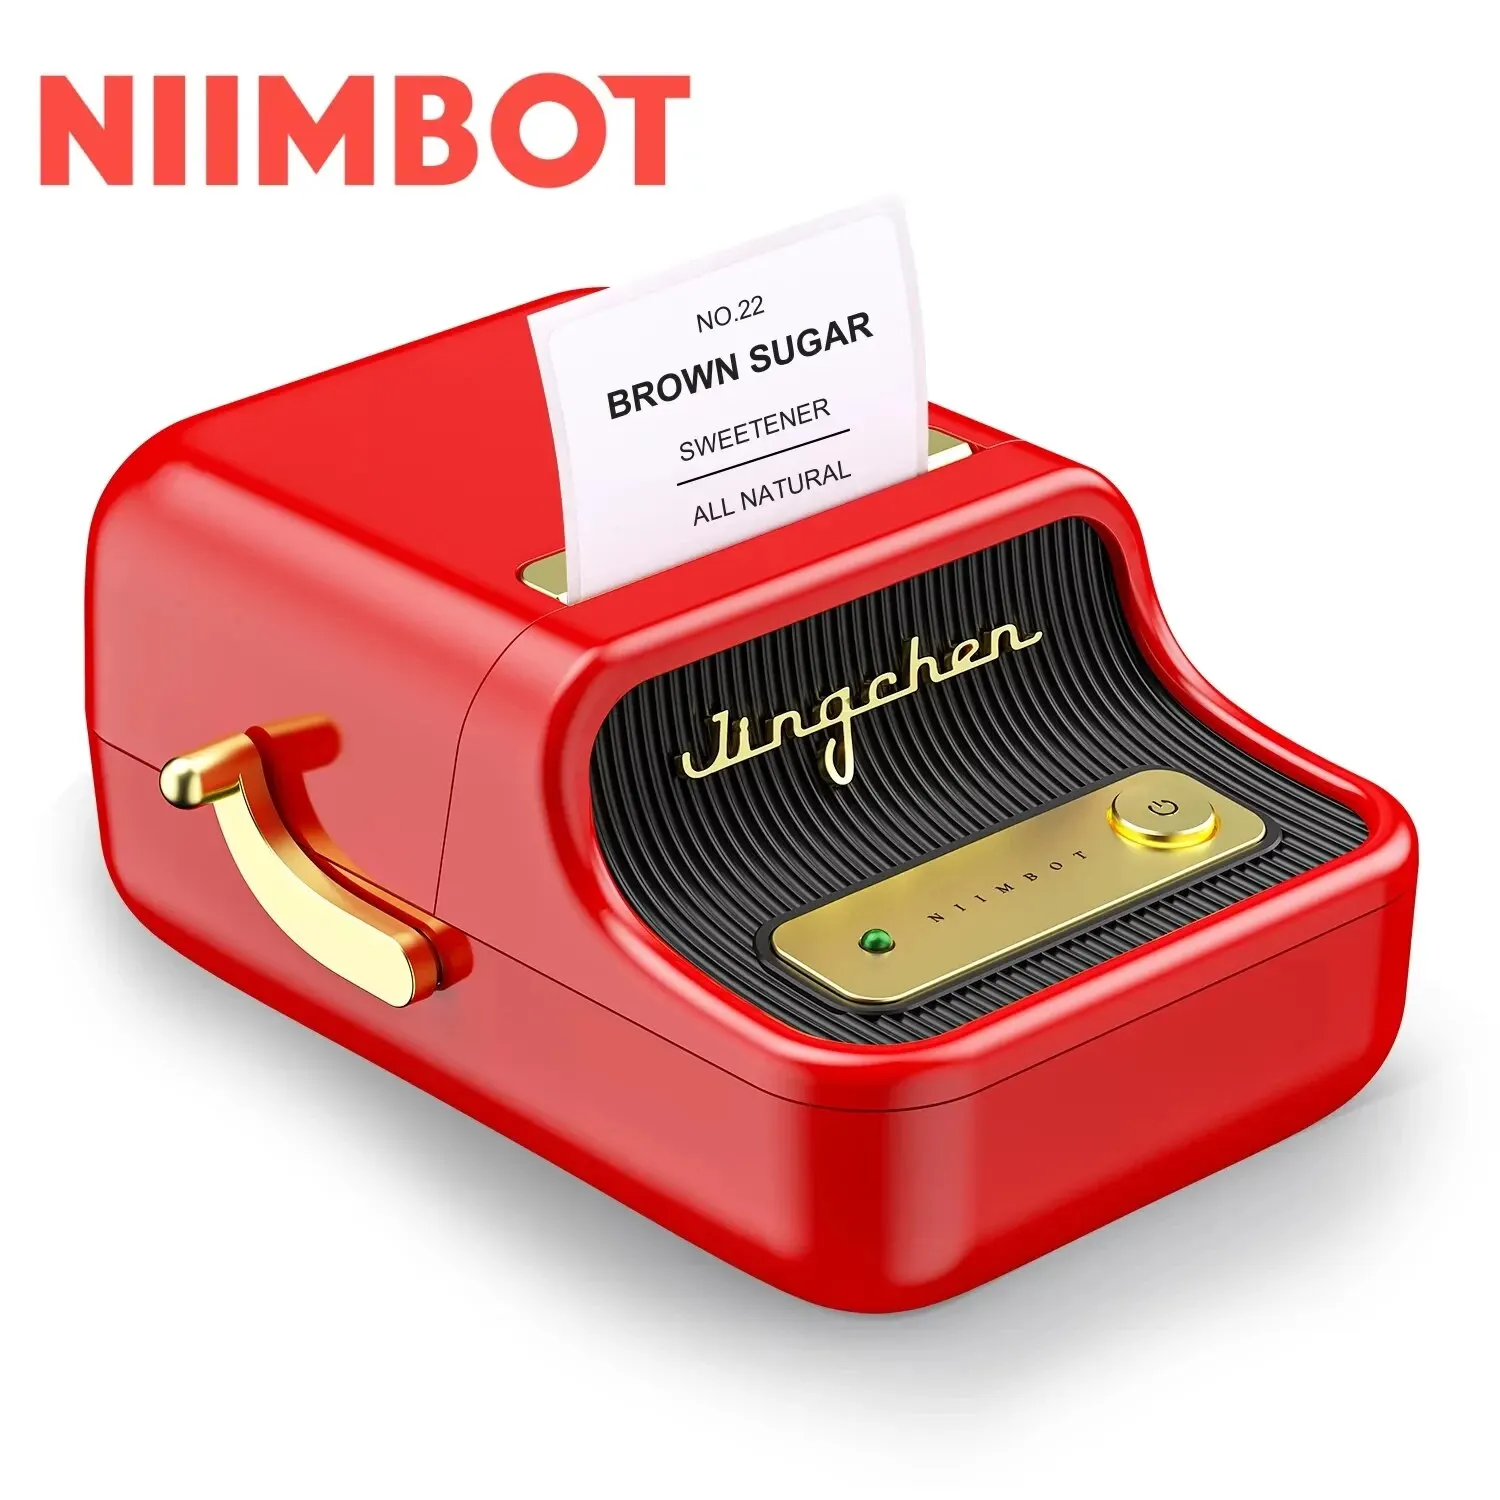 Niimbot B21 Mini Etiqueta Impressora Portátil Térmica para Celular, Impressora Adesiva, Adesivo, Sem fio, Bluetooth, Tag, Preço Label Maker